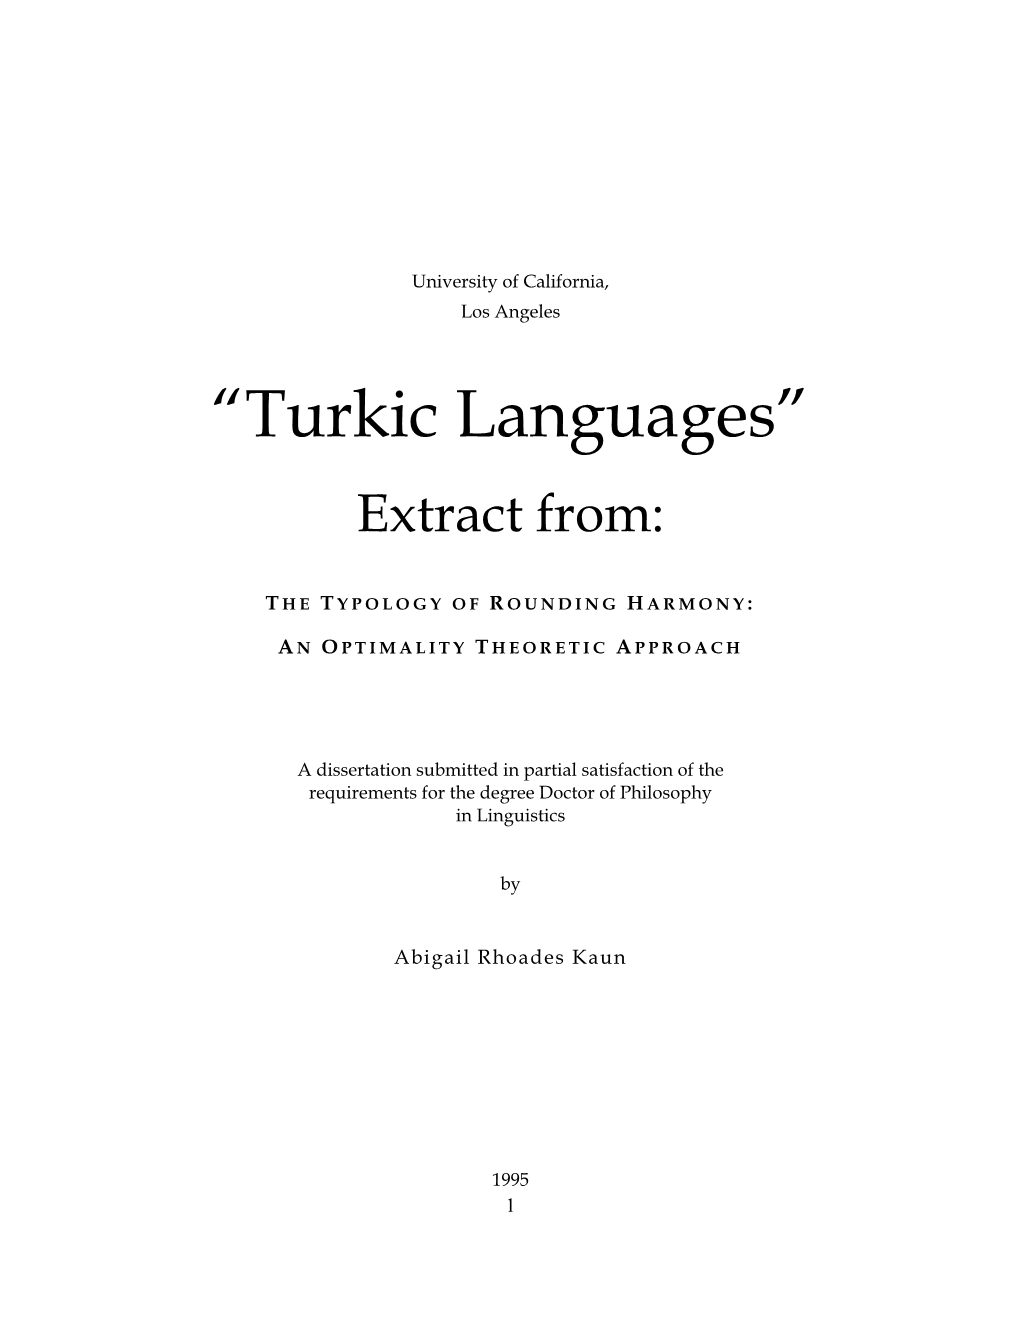 Turkic Languages”